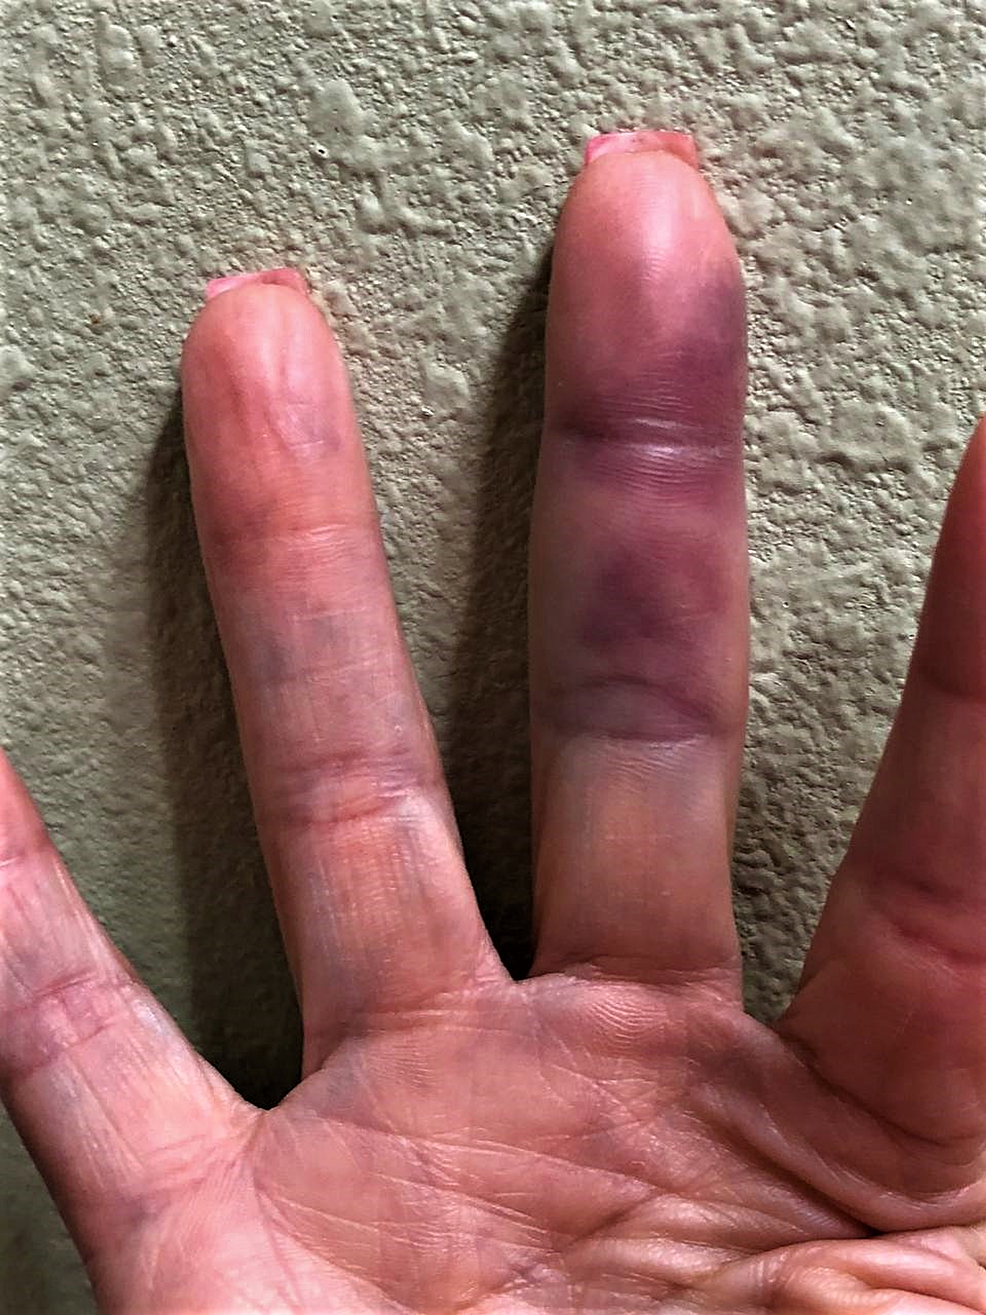 bruised middle finger